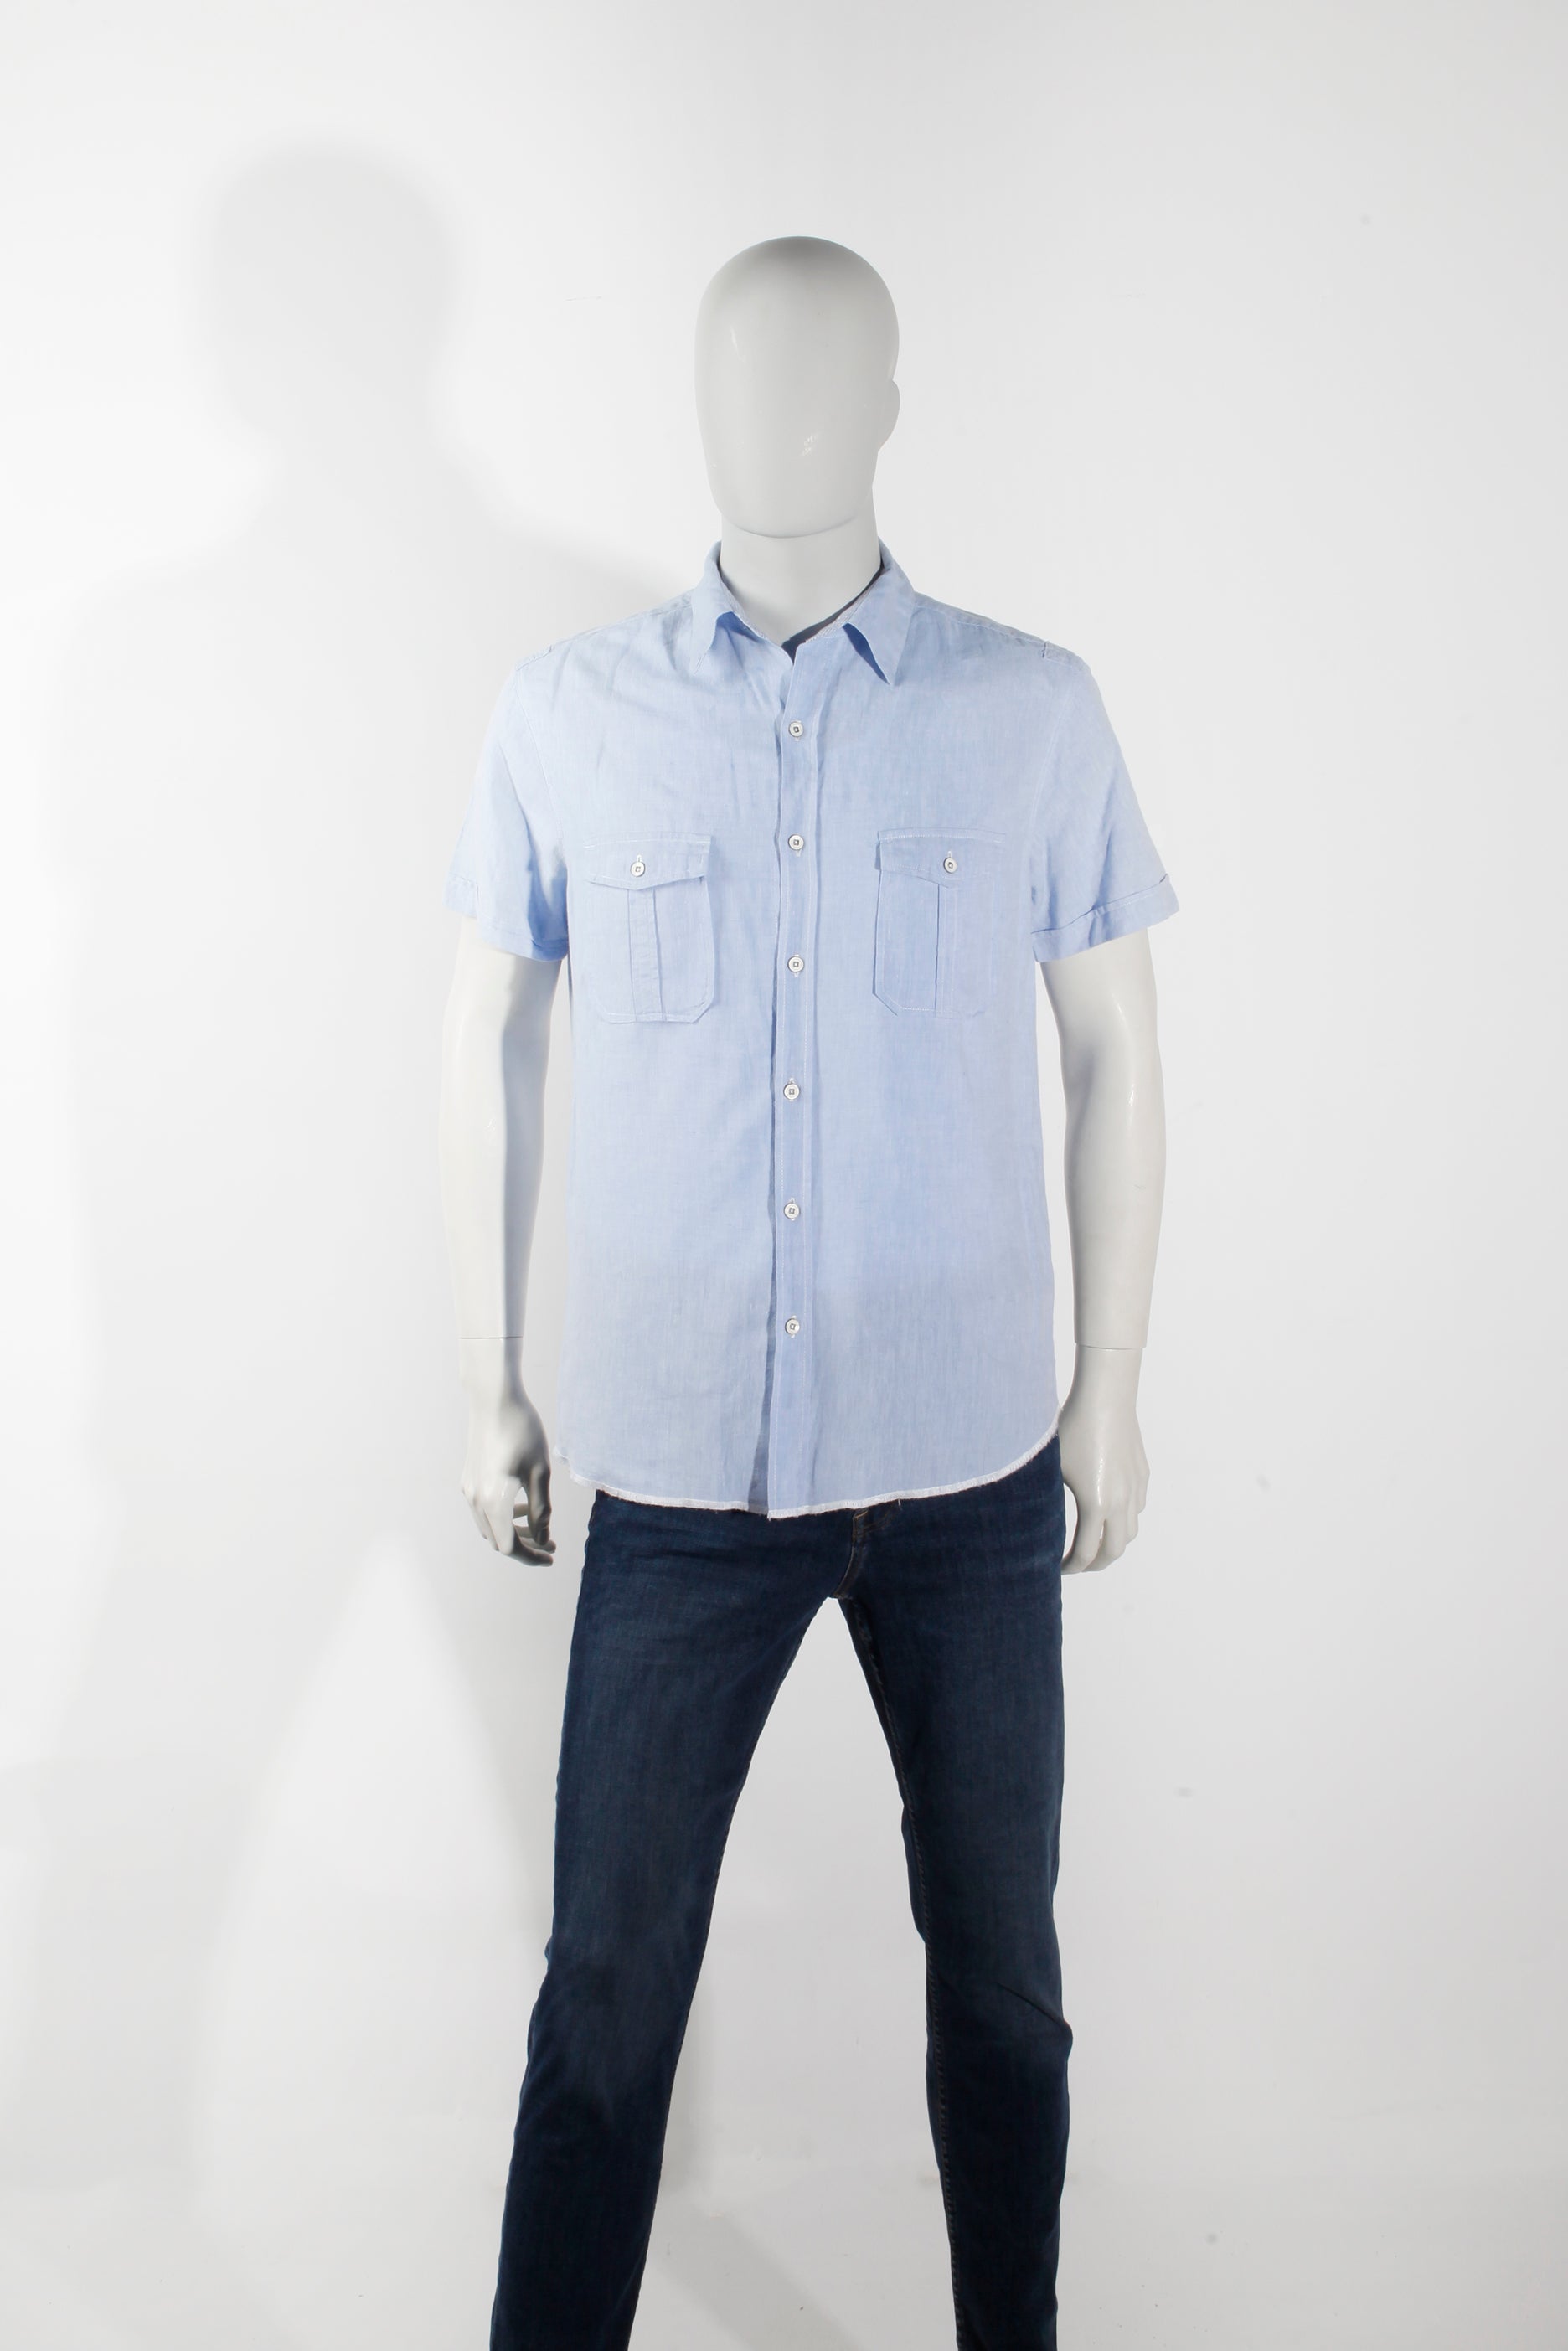 Mens Light Blue Linen Shirt with Pockets (Medium)